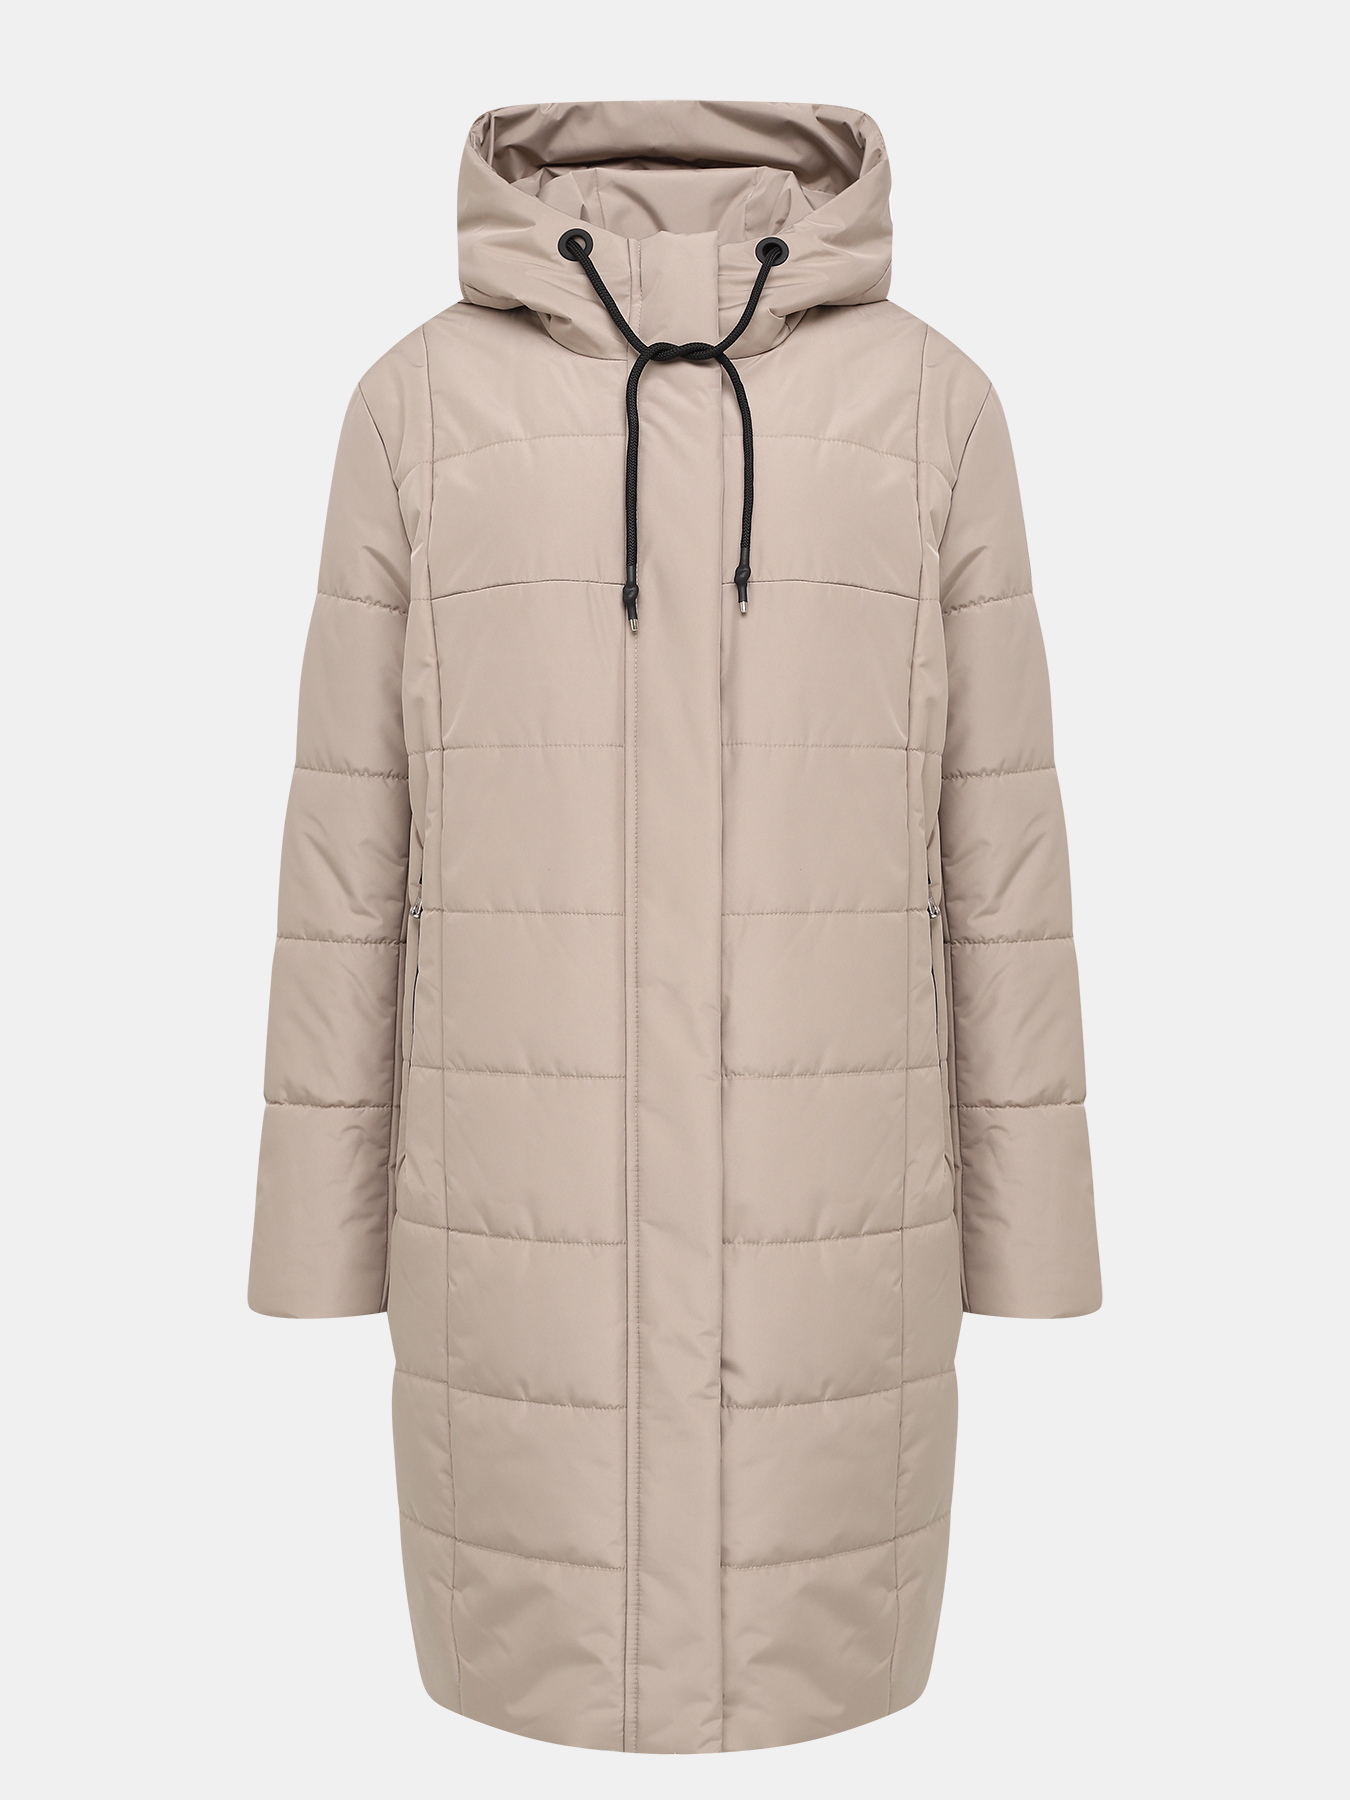 Пальто зимнее Maritta 433536-021, цвет бежевый, размер 46 - фото 1